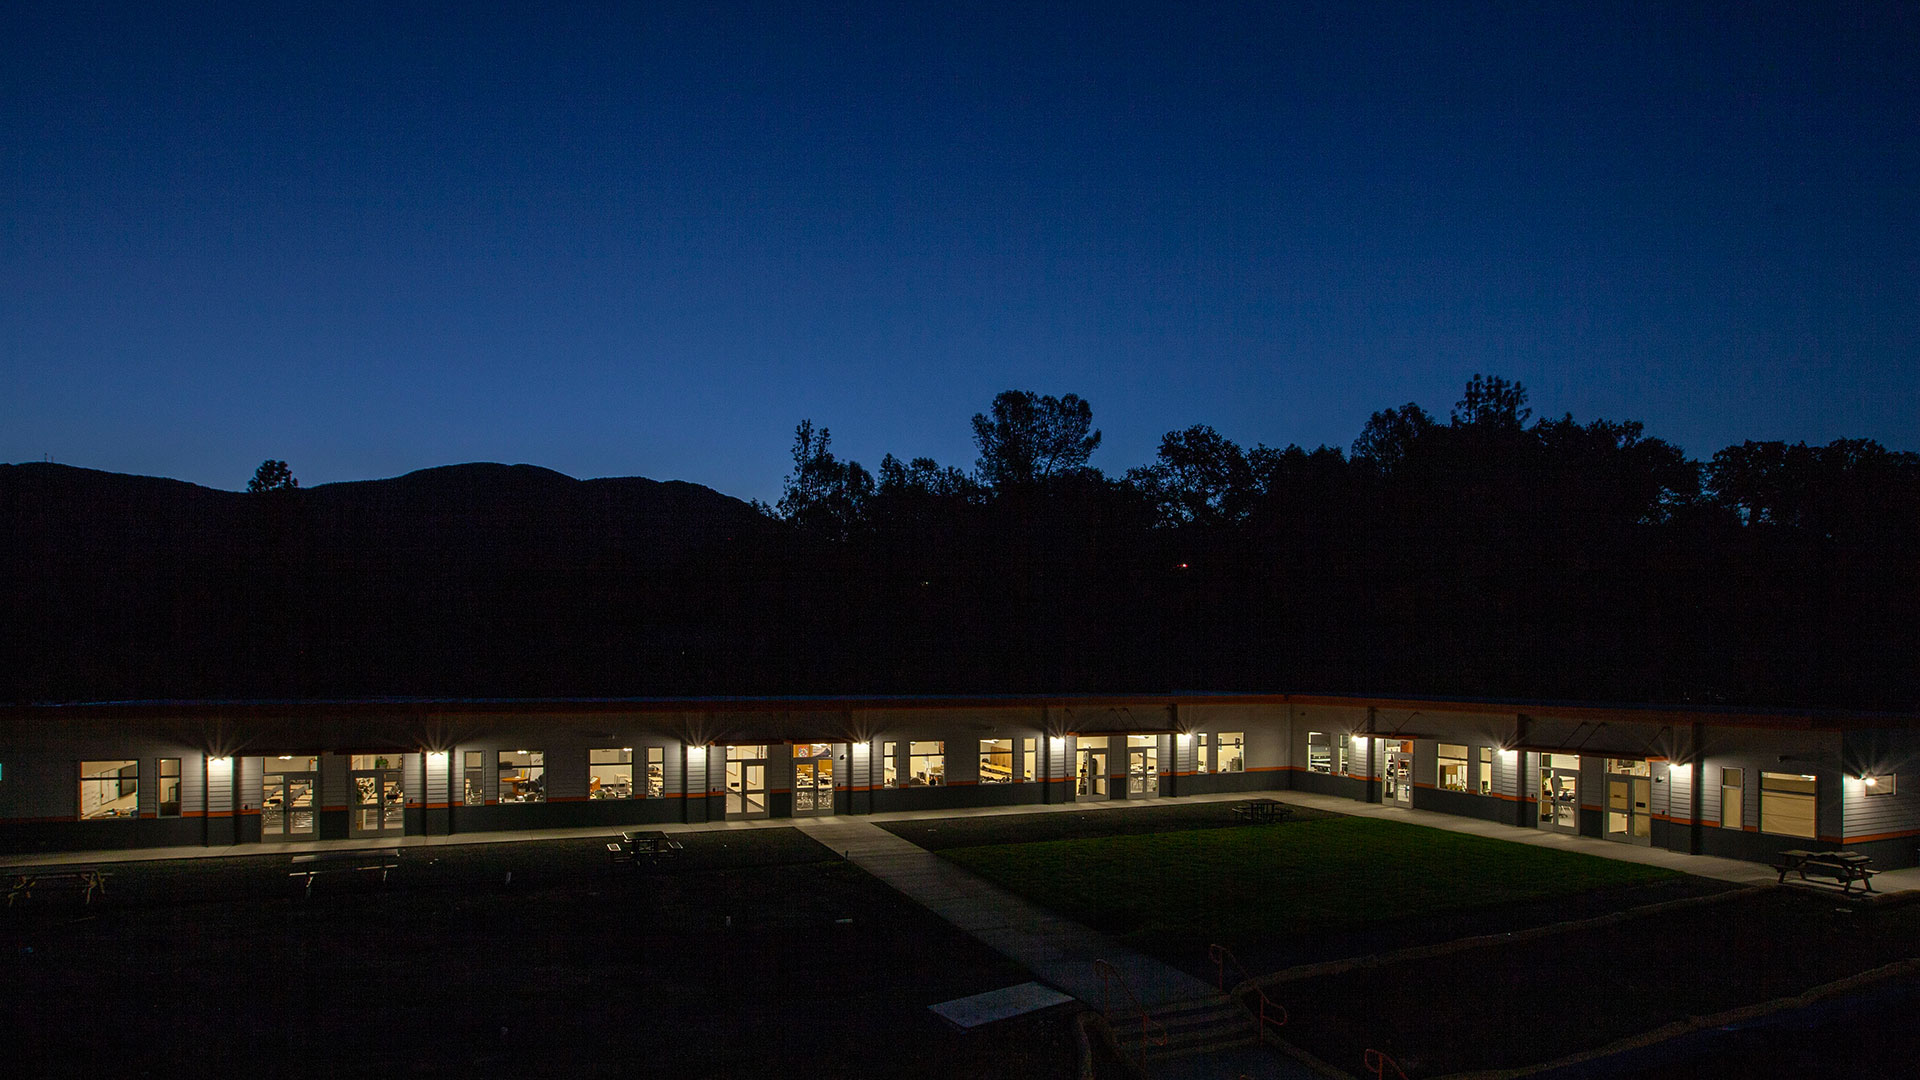 Modular classroom wing at night, with classroom windows illuminated.